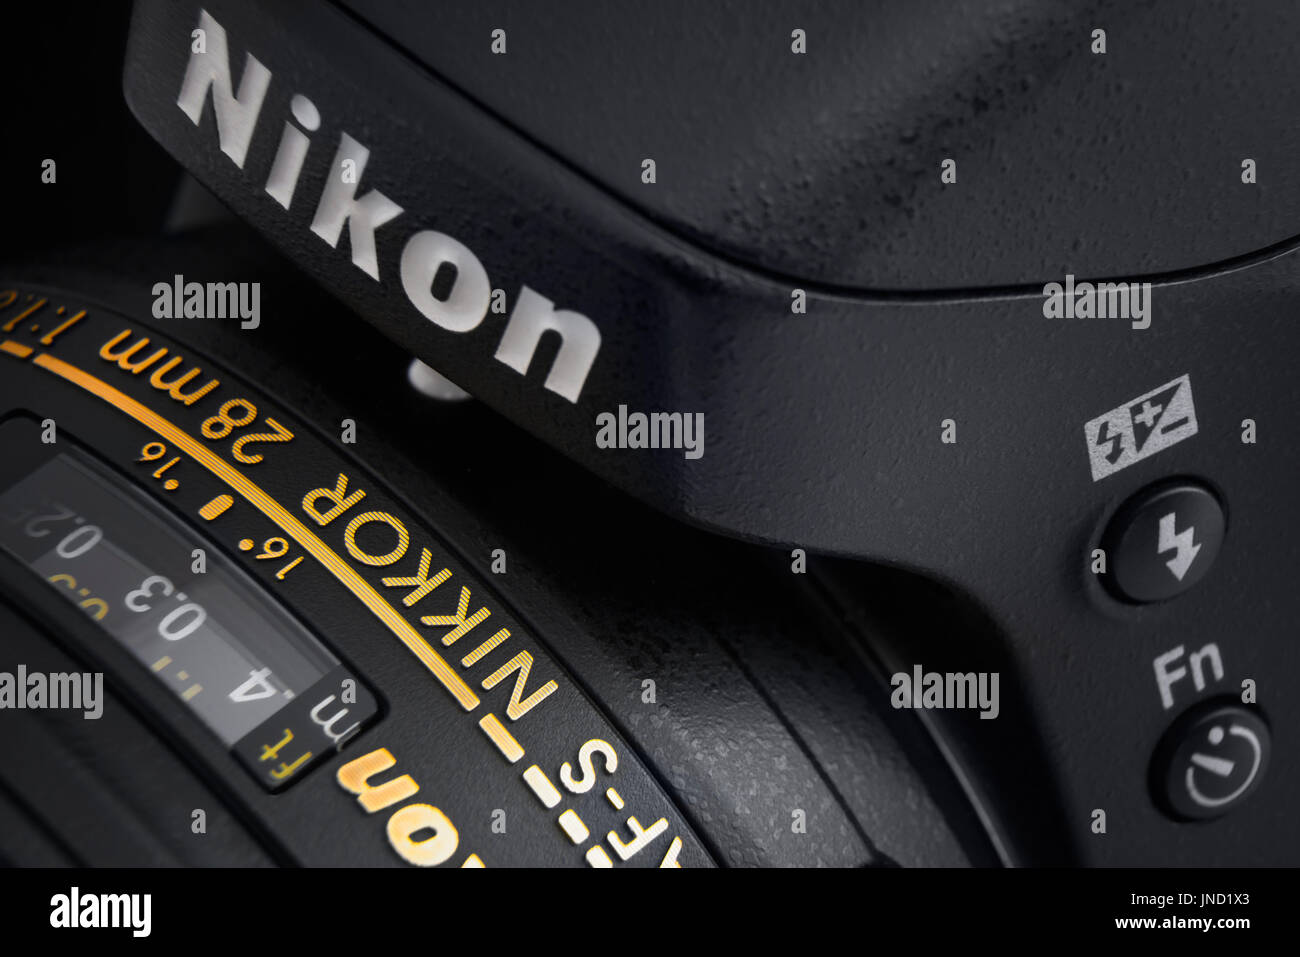 Warsaw, Poland - December 31, 2016: Digital SLR professional Nikon camera with Nikkor lens. Close-up view. Image in dark Stock Photo